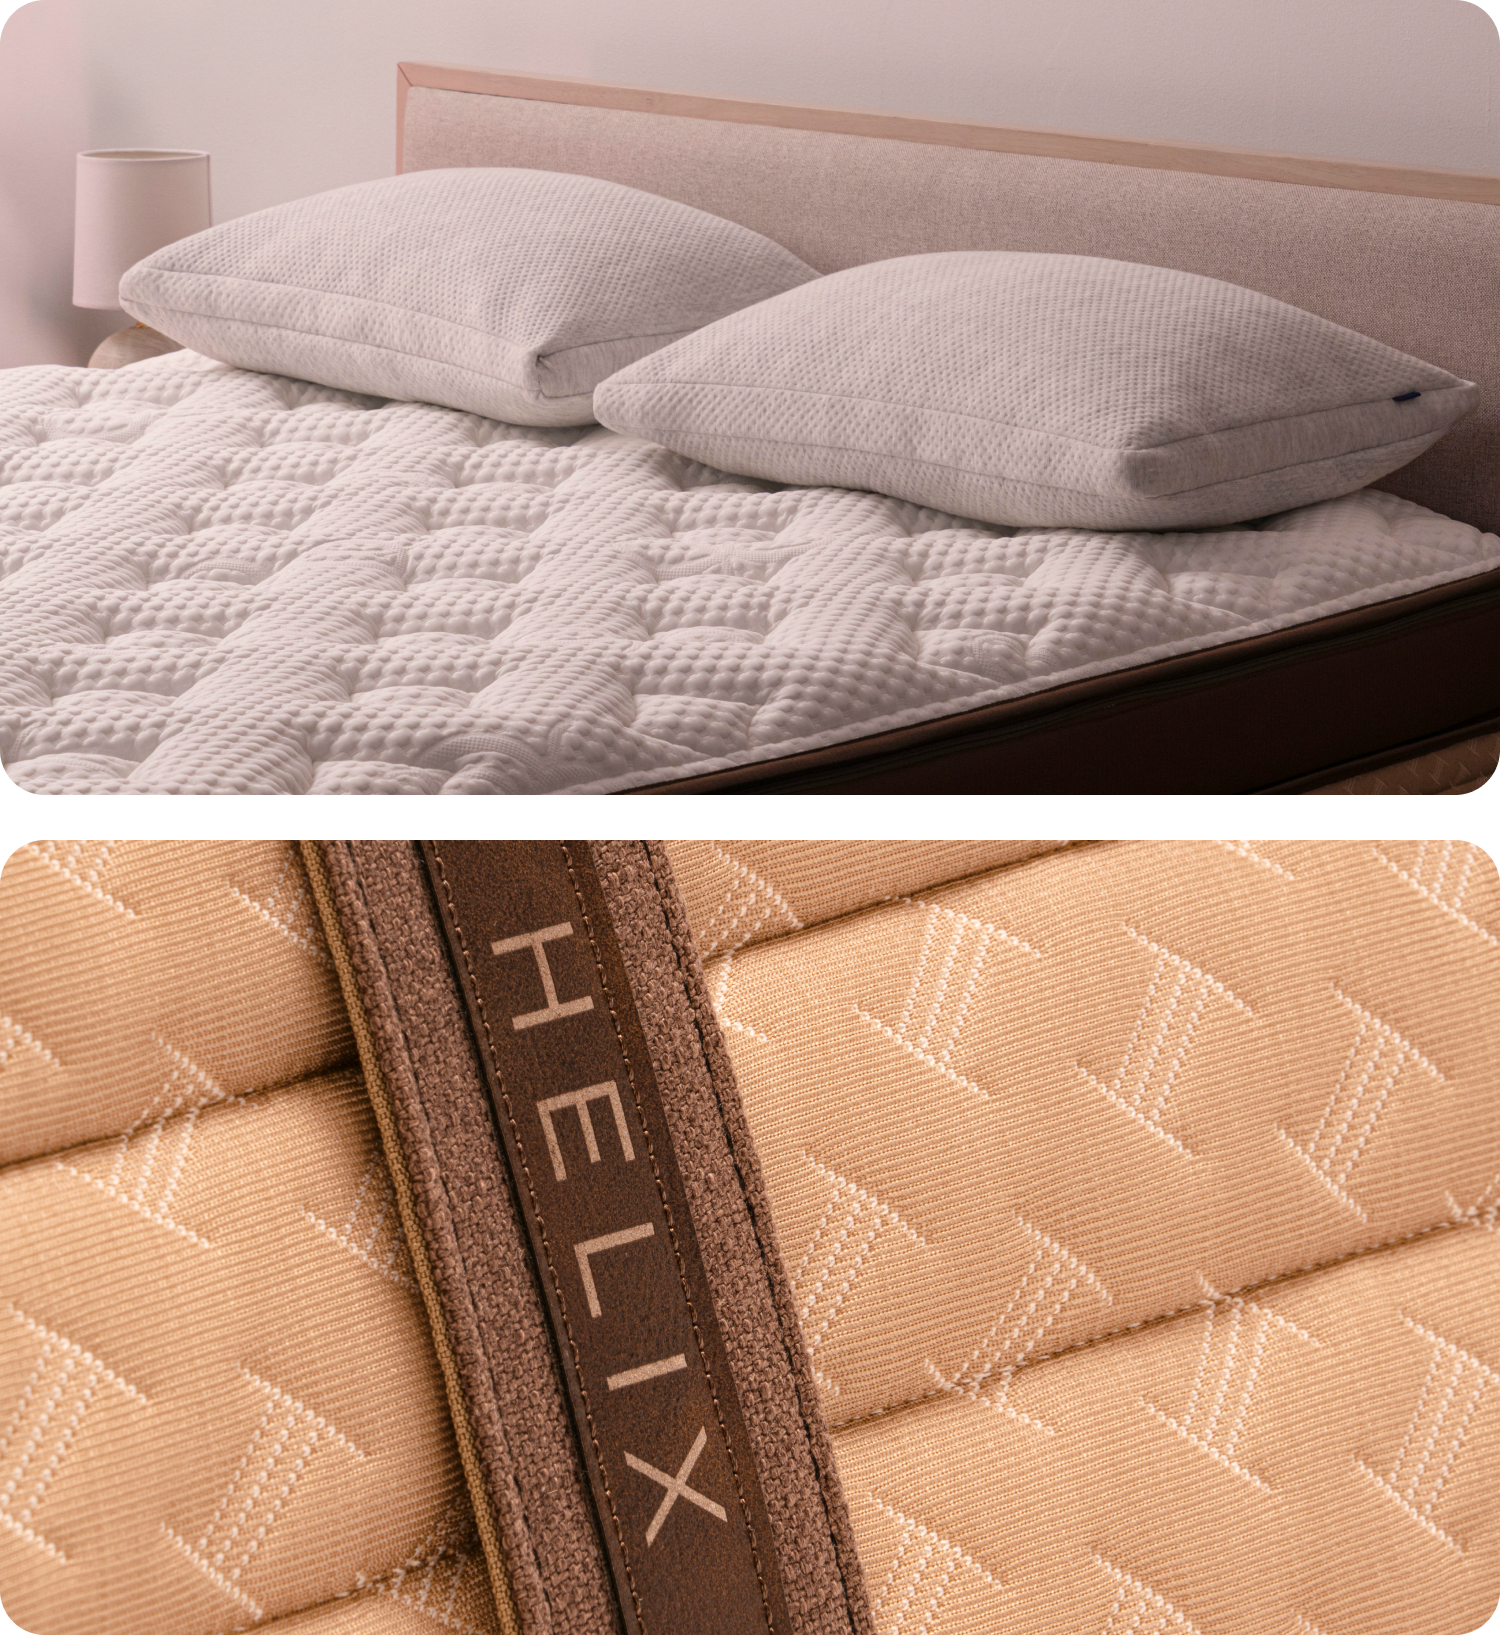 Helix Elite Mattress material textures